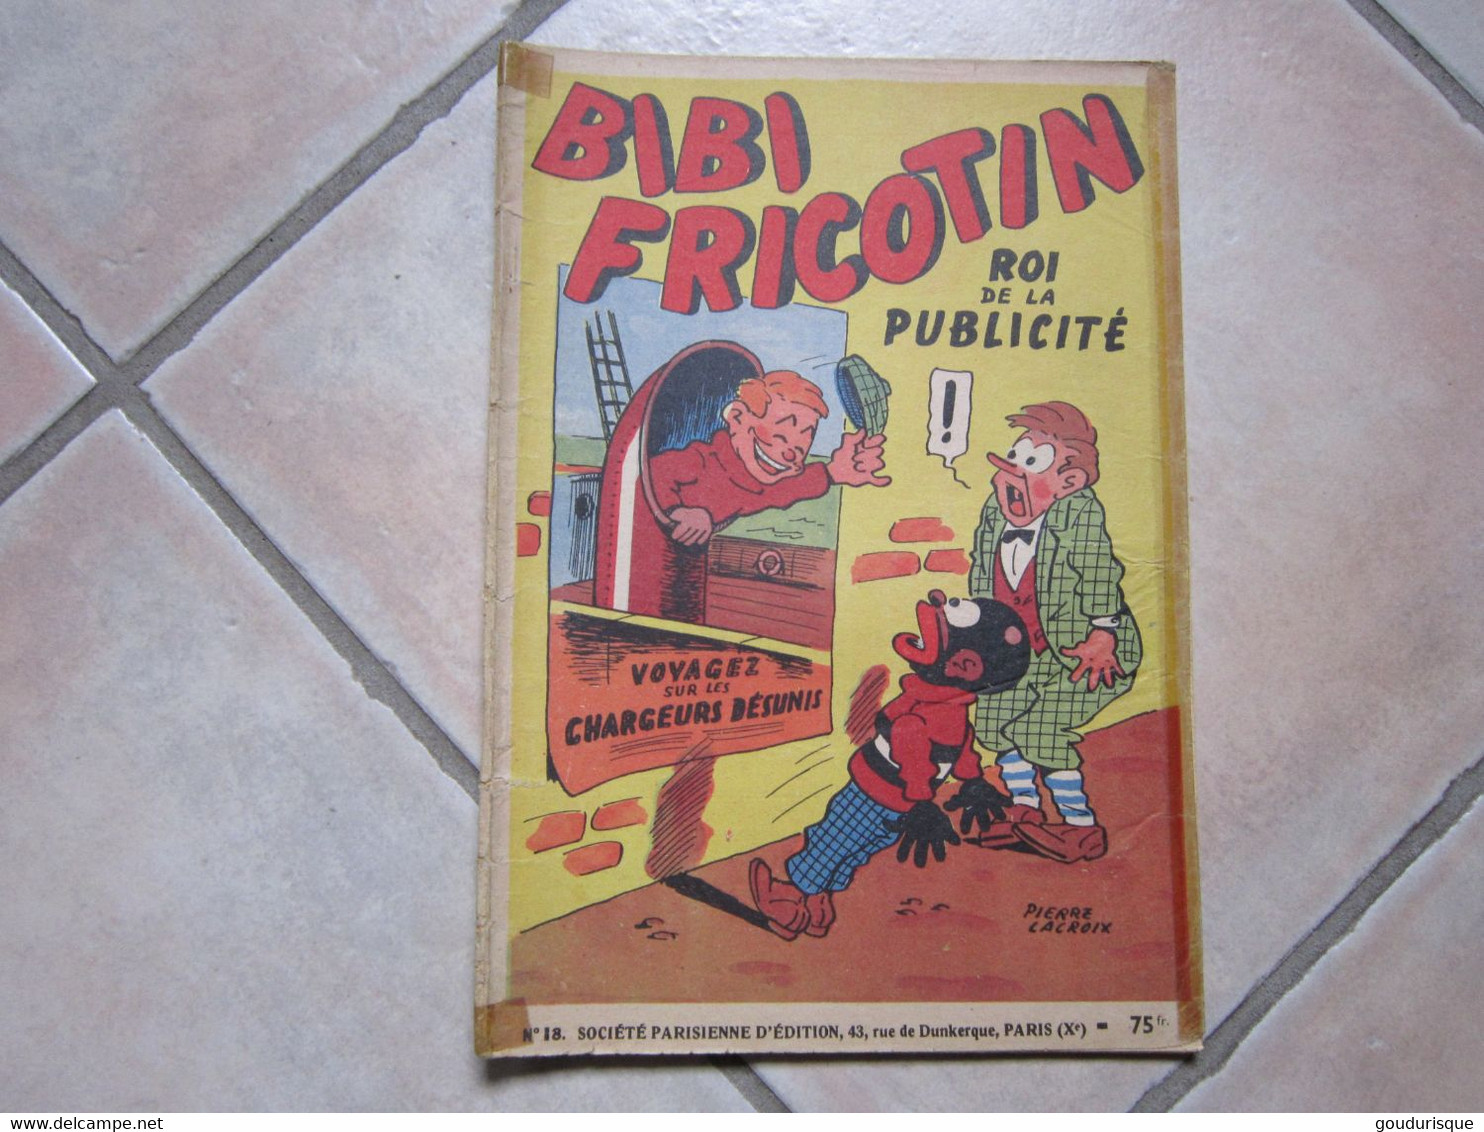 BIBI FRICOTIN N°18  BIBI FRICOTIN ROI DE LA PUBLICITE - Bibi Fricotin